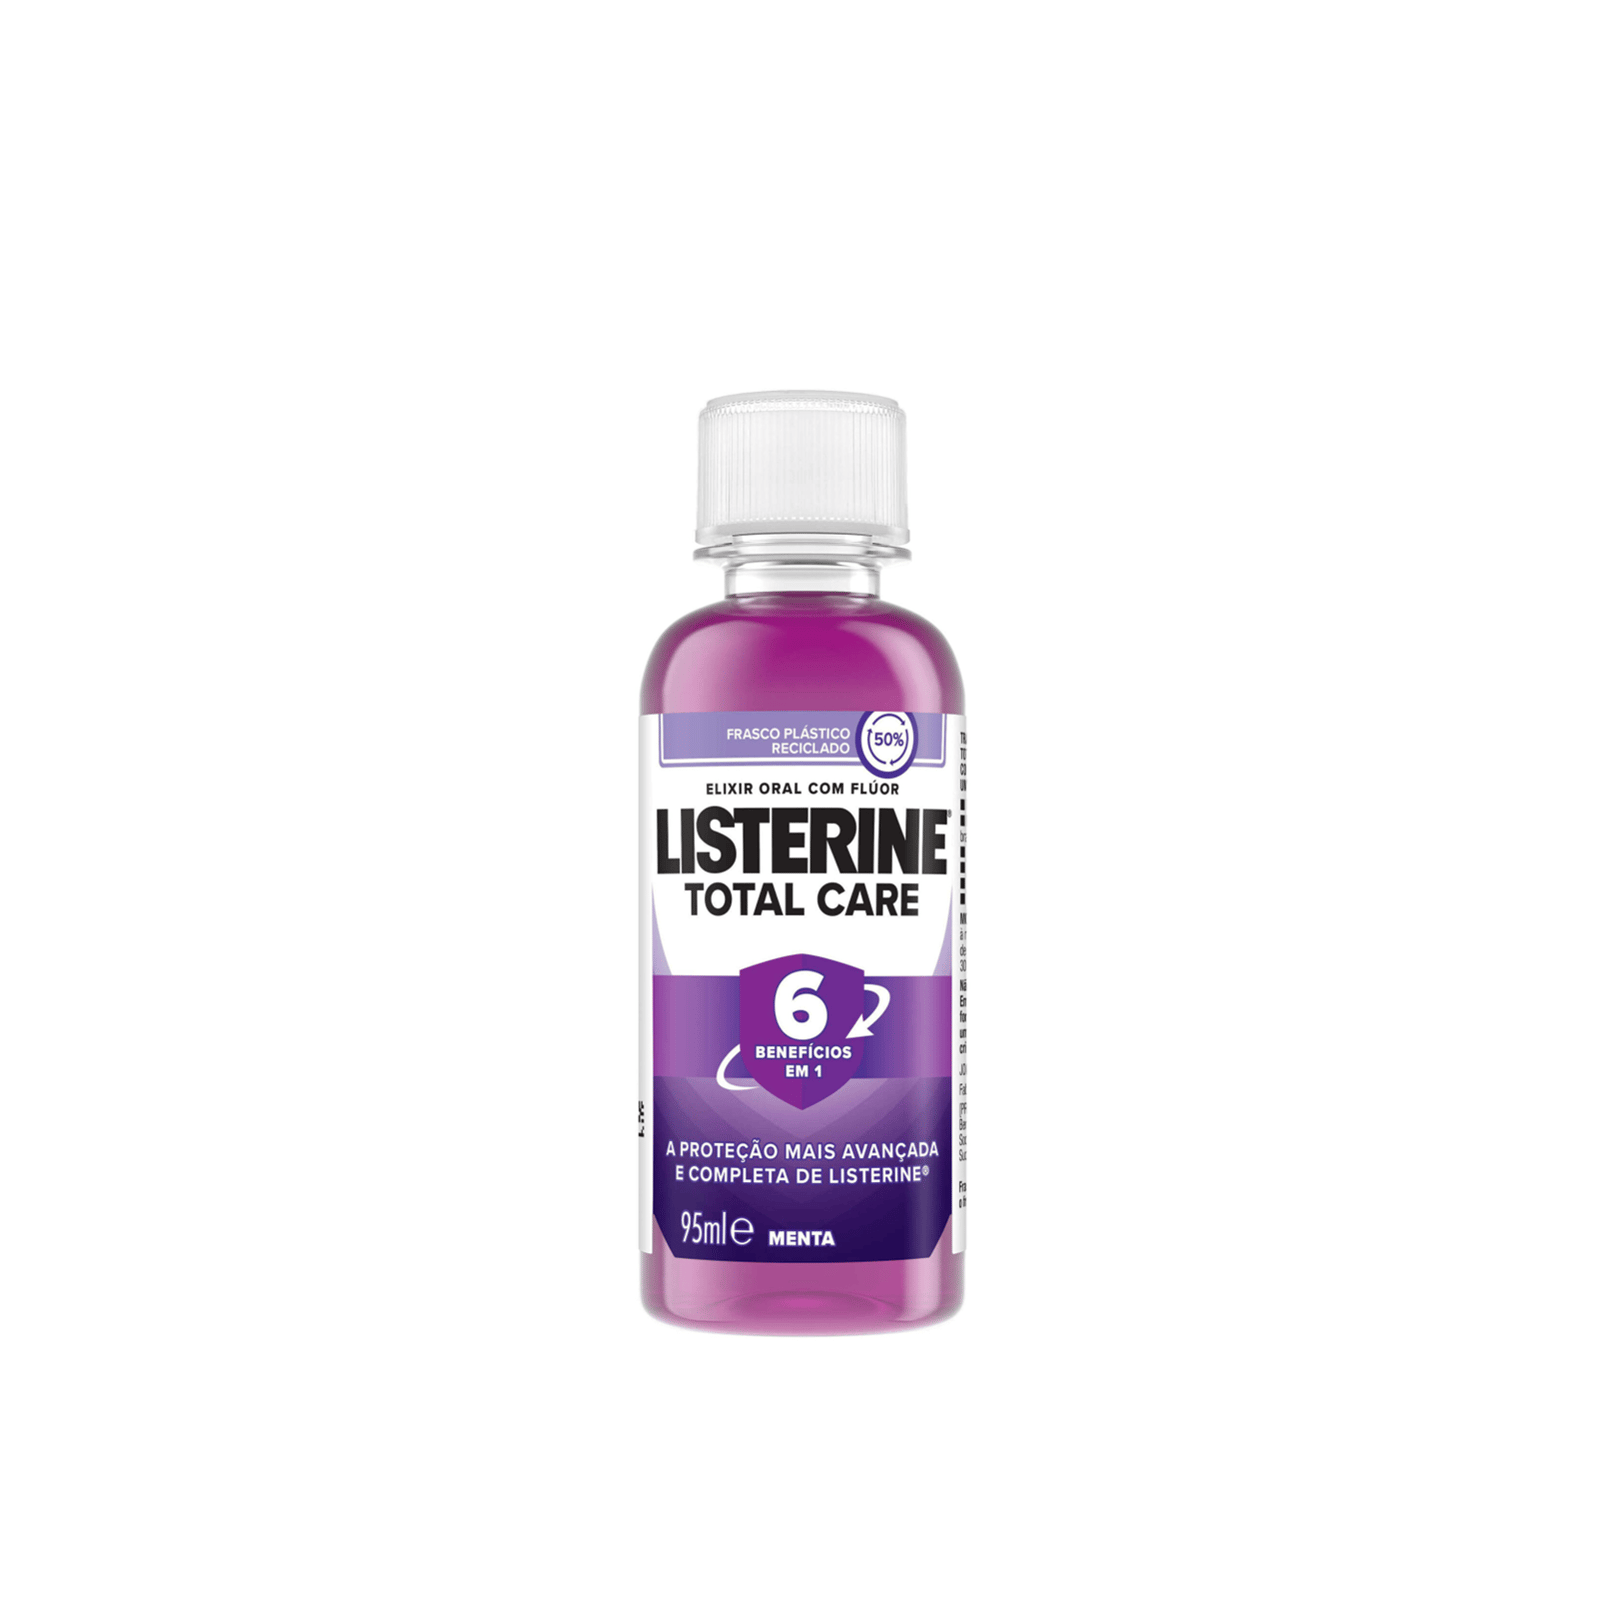 Listerine Total Care Mouthwash 95ml (3.2 fl oz)